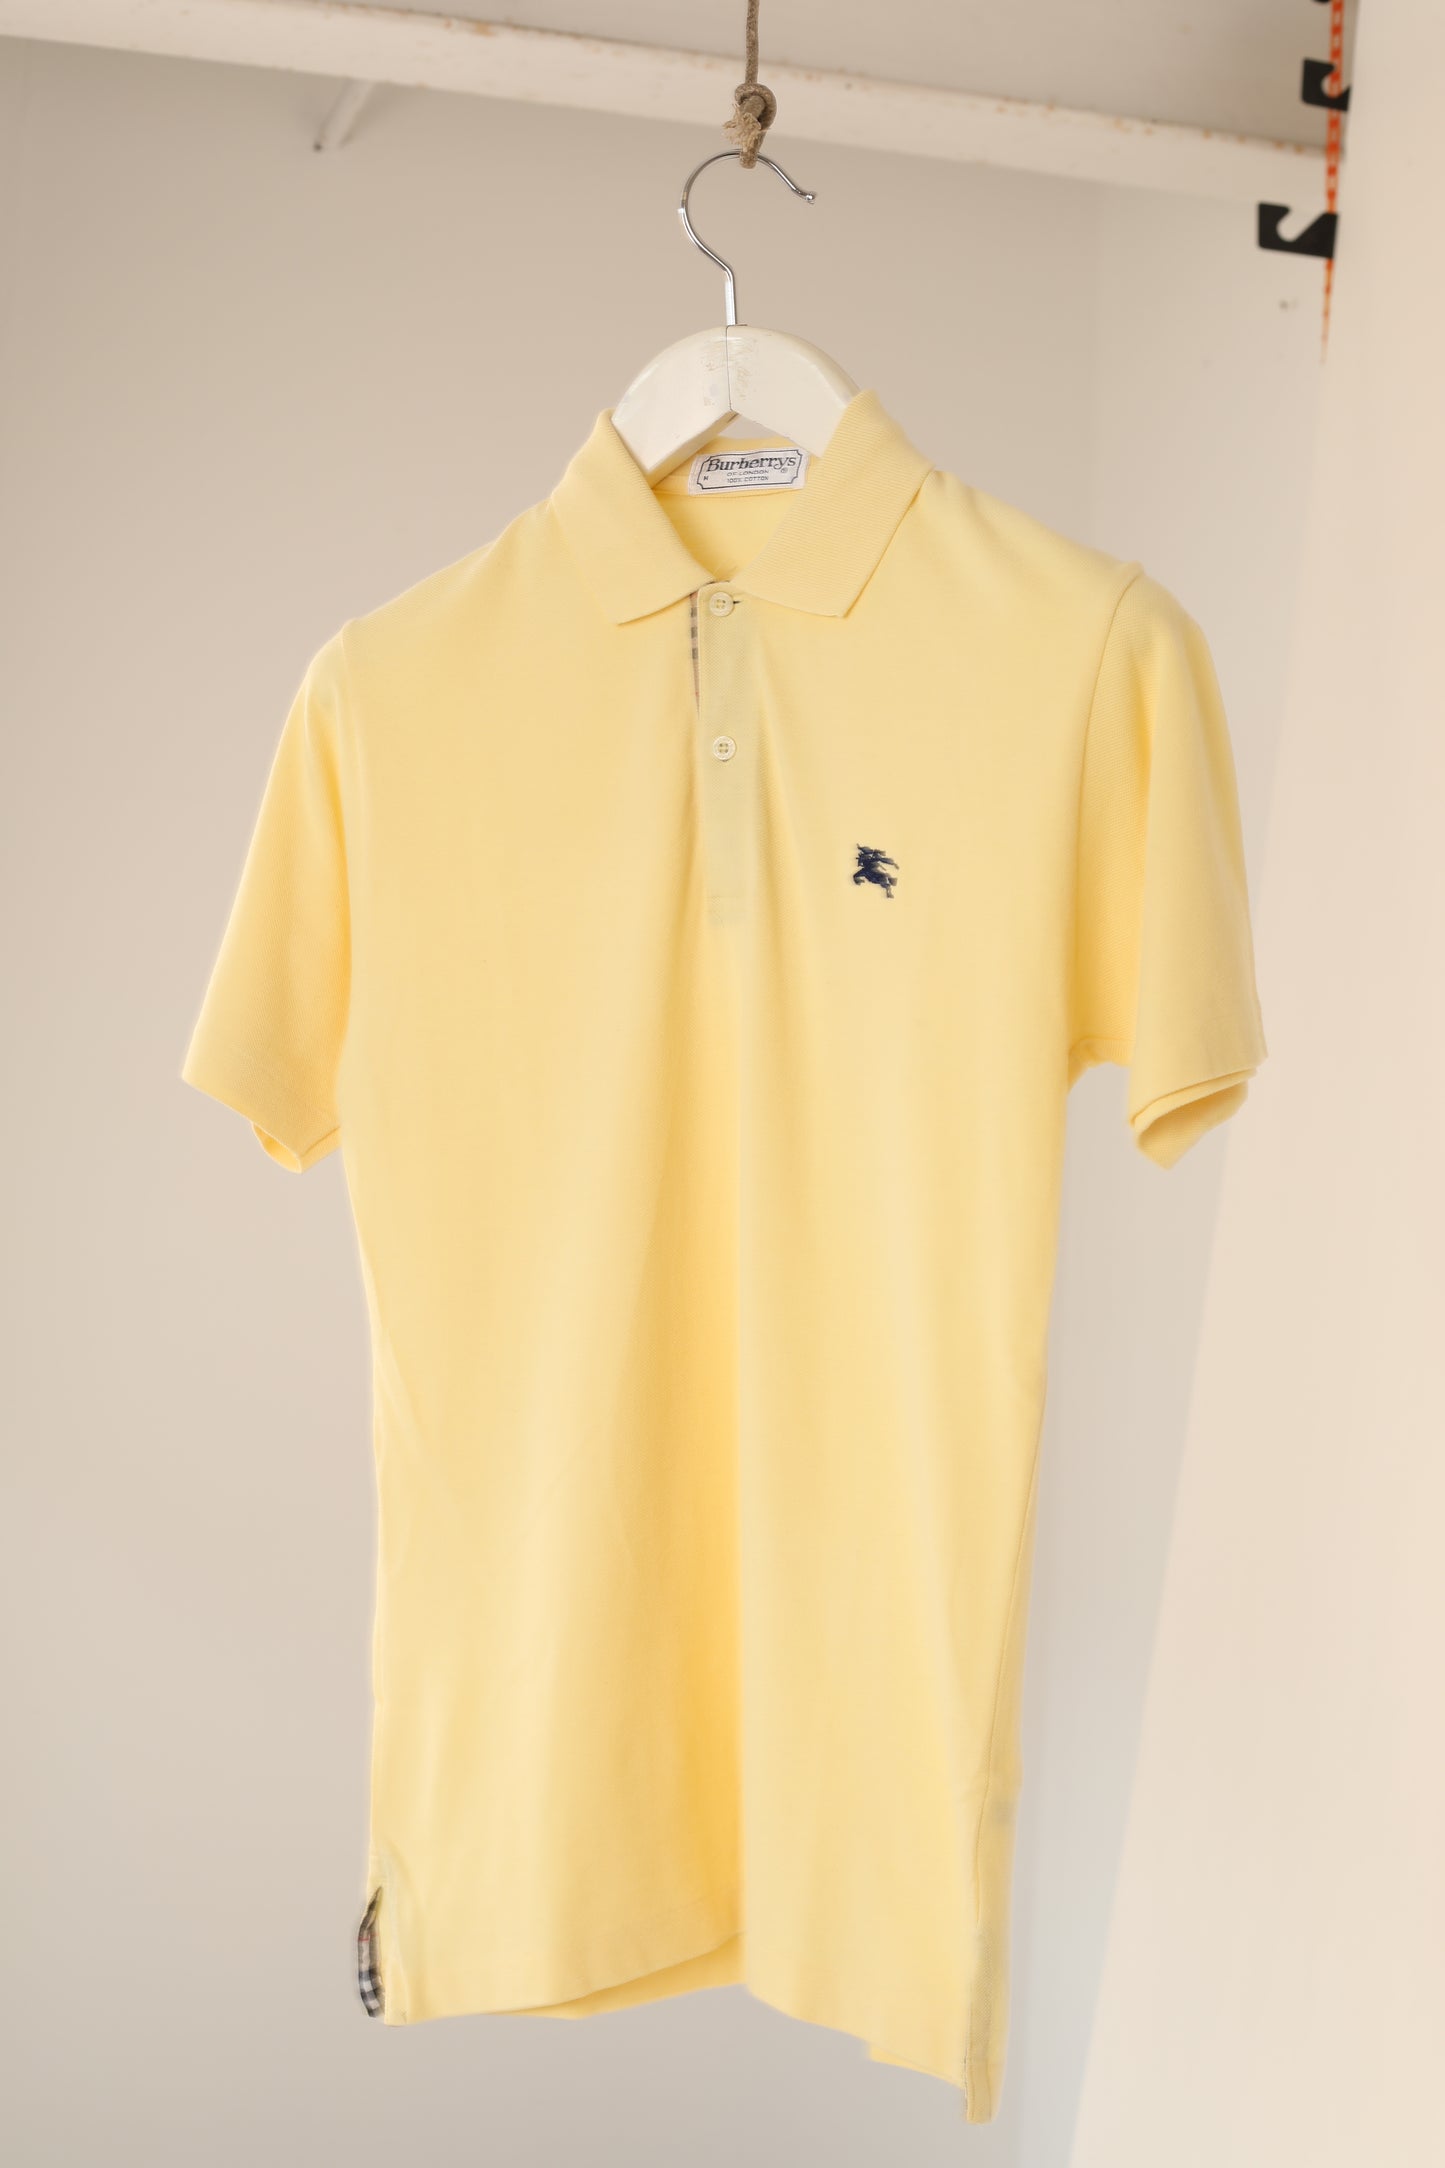 Vintage Burberrys of London polo shirt